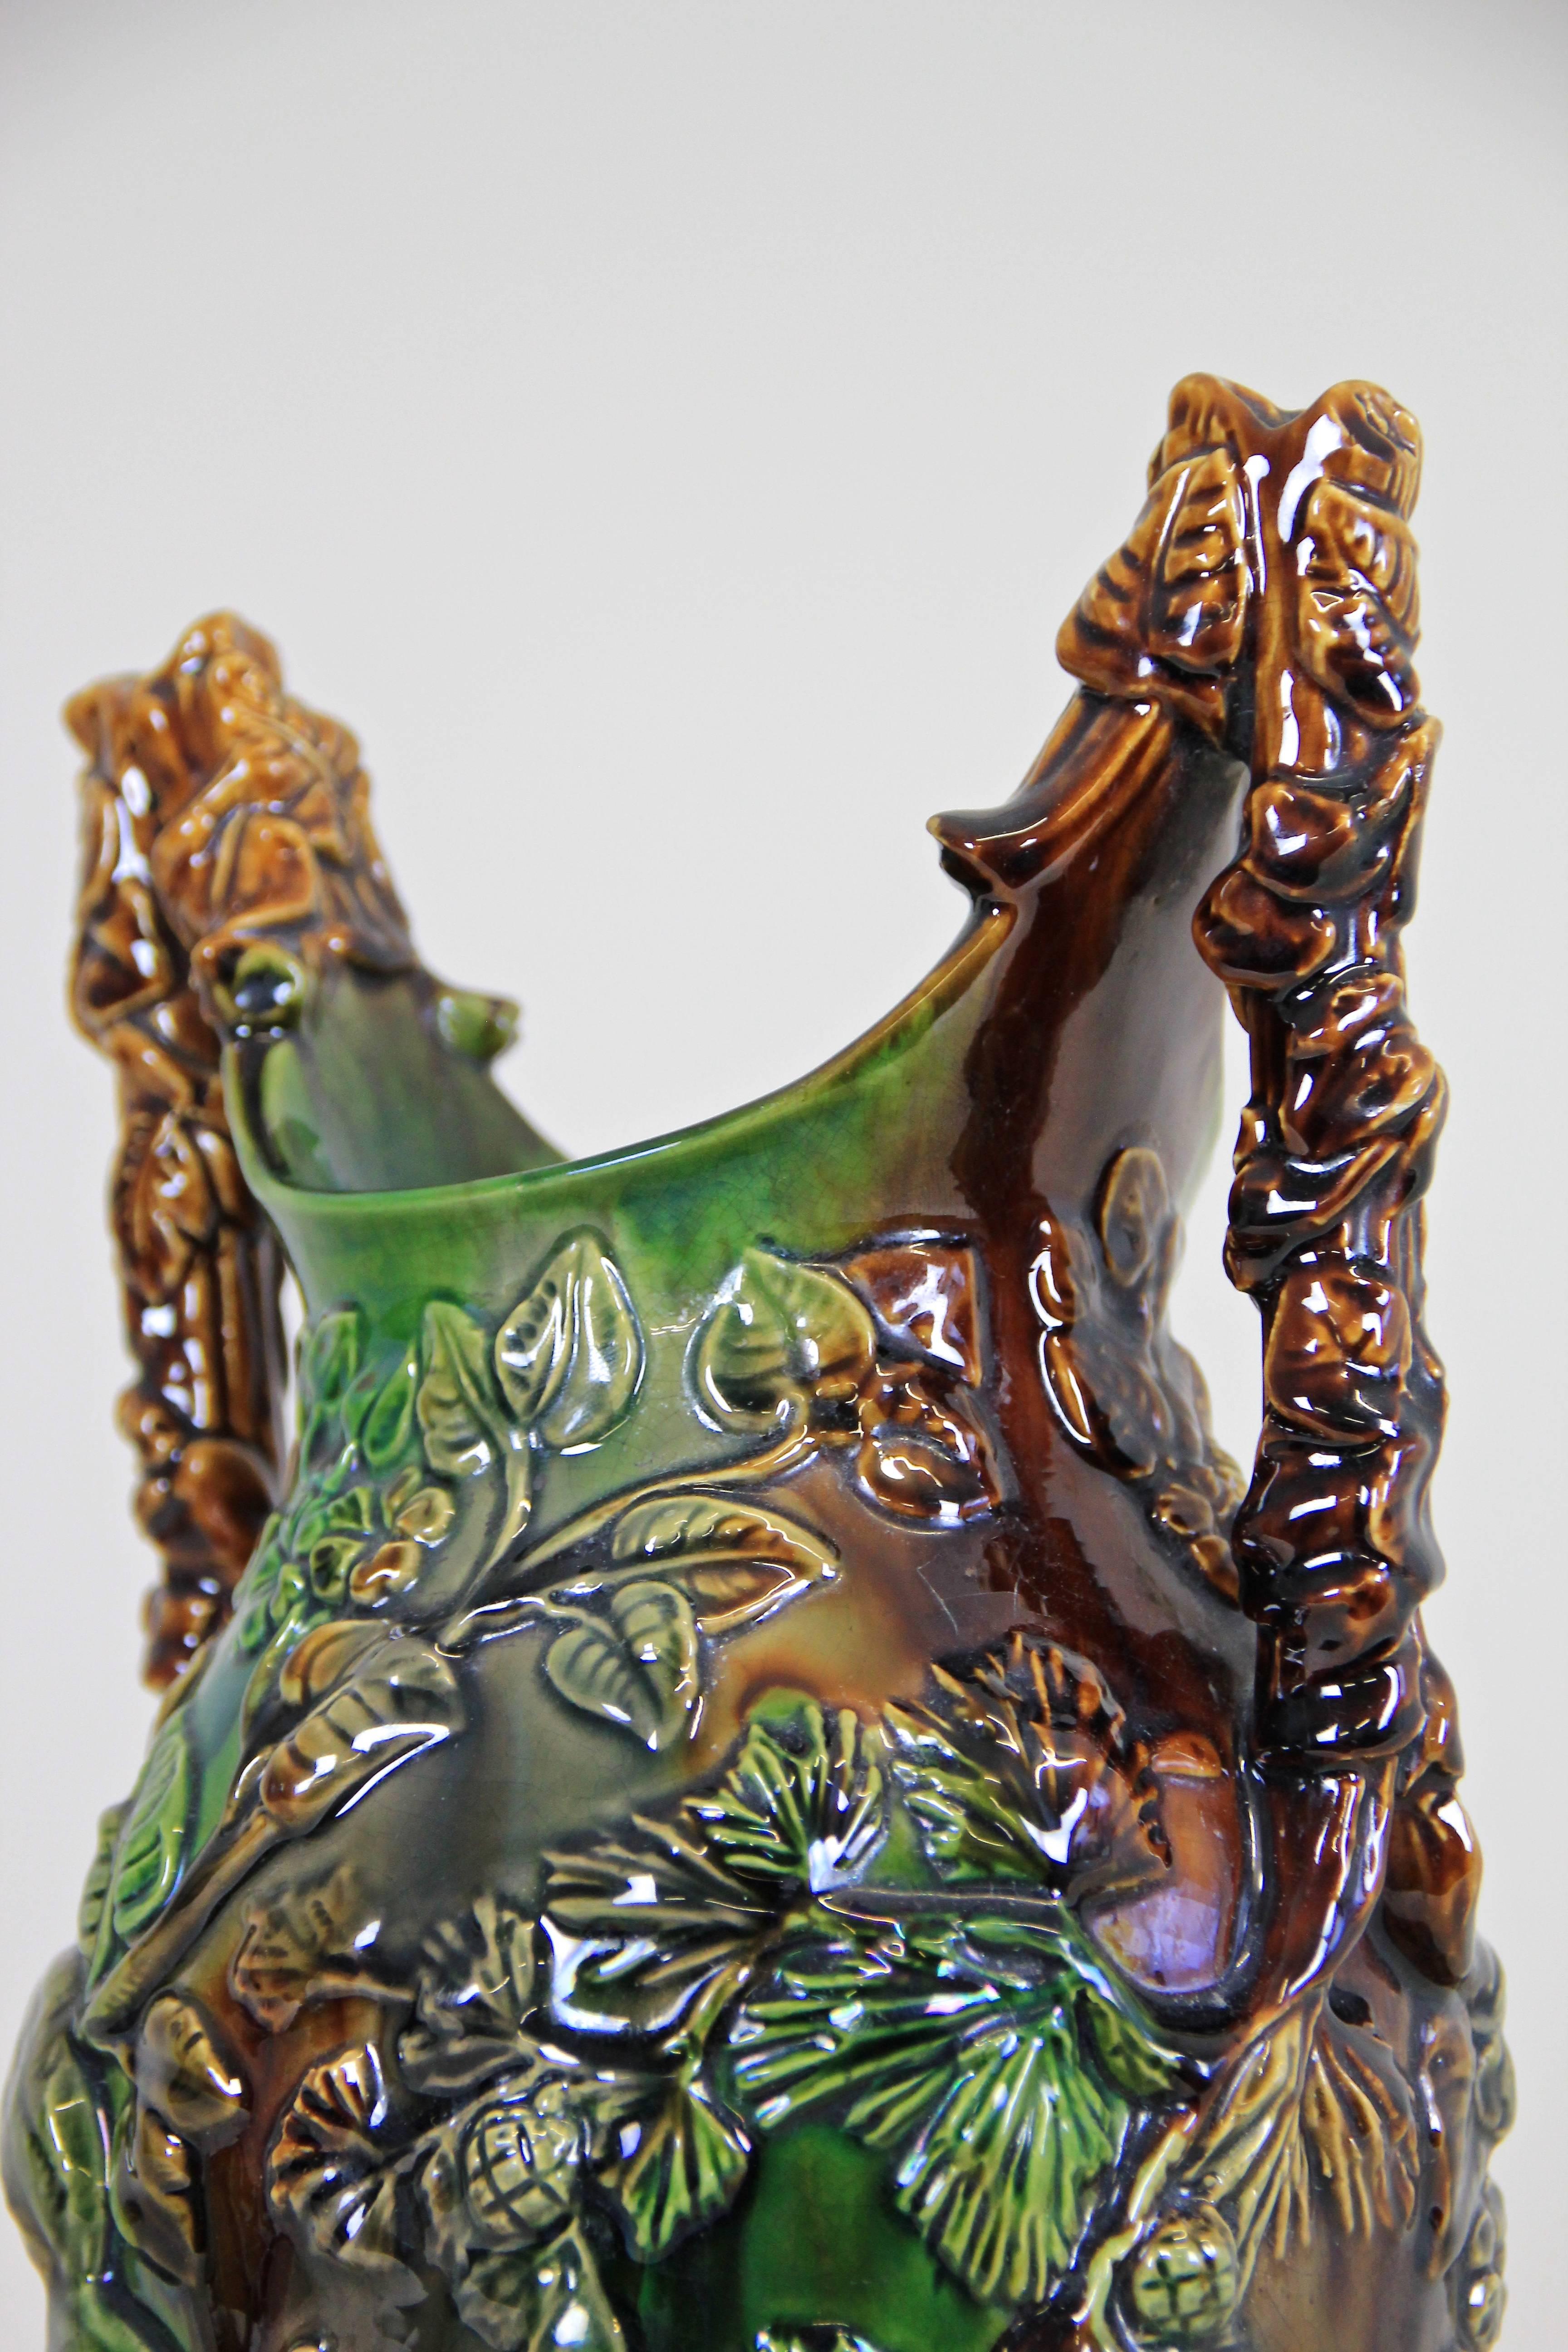 Czech Majolica Vase by Eichwald Art Nouveau, Bohemia, circa 1900